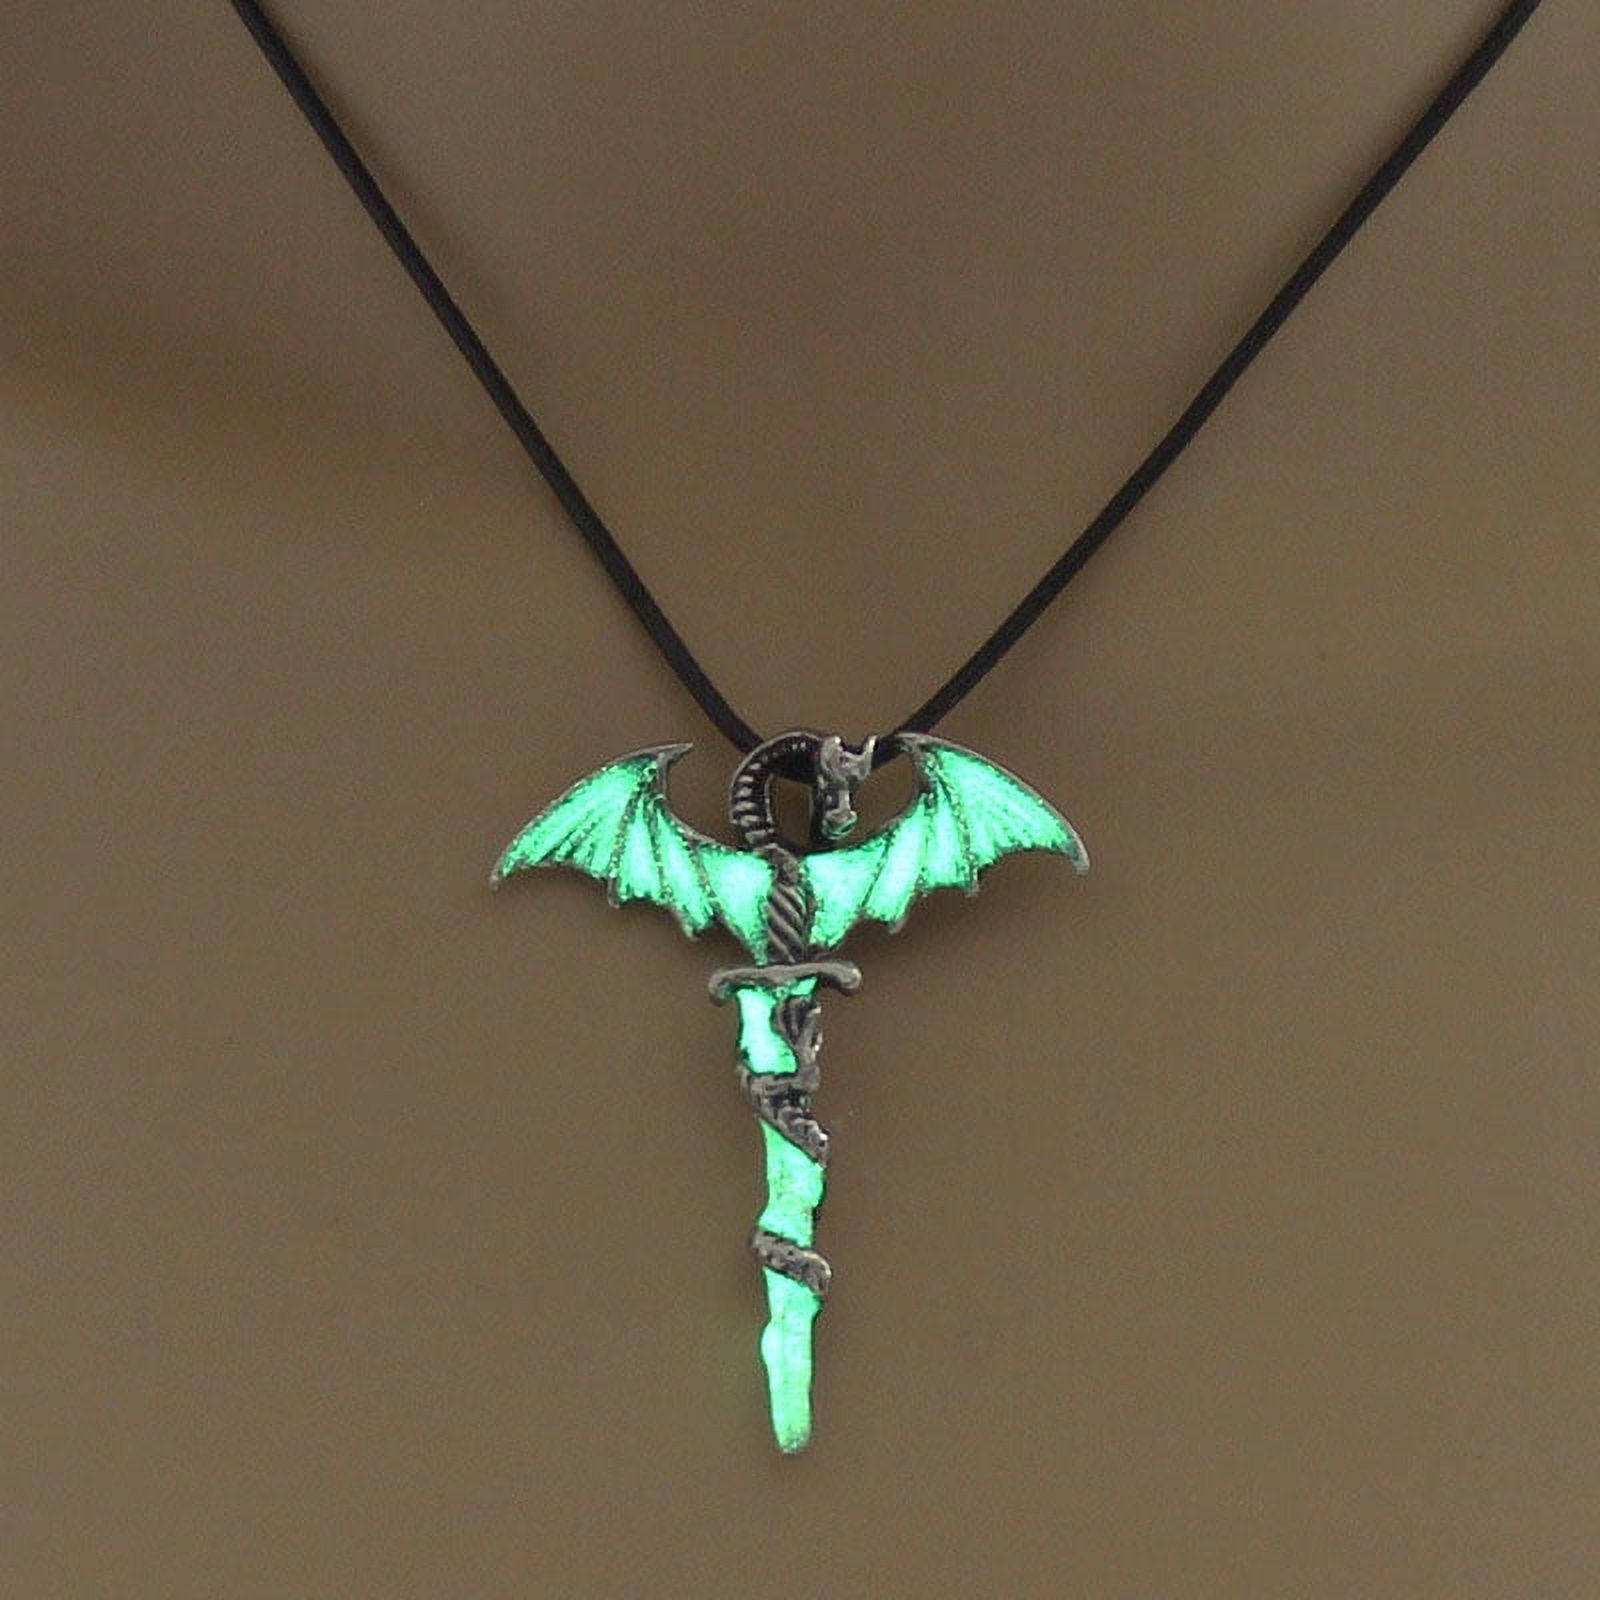 1 Pcs Women Men Necklace Chain Dragon Glow in the Dark Pendant Fashion Jewelry - image 2 of 4